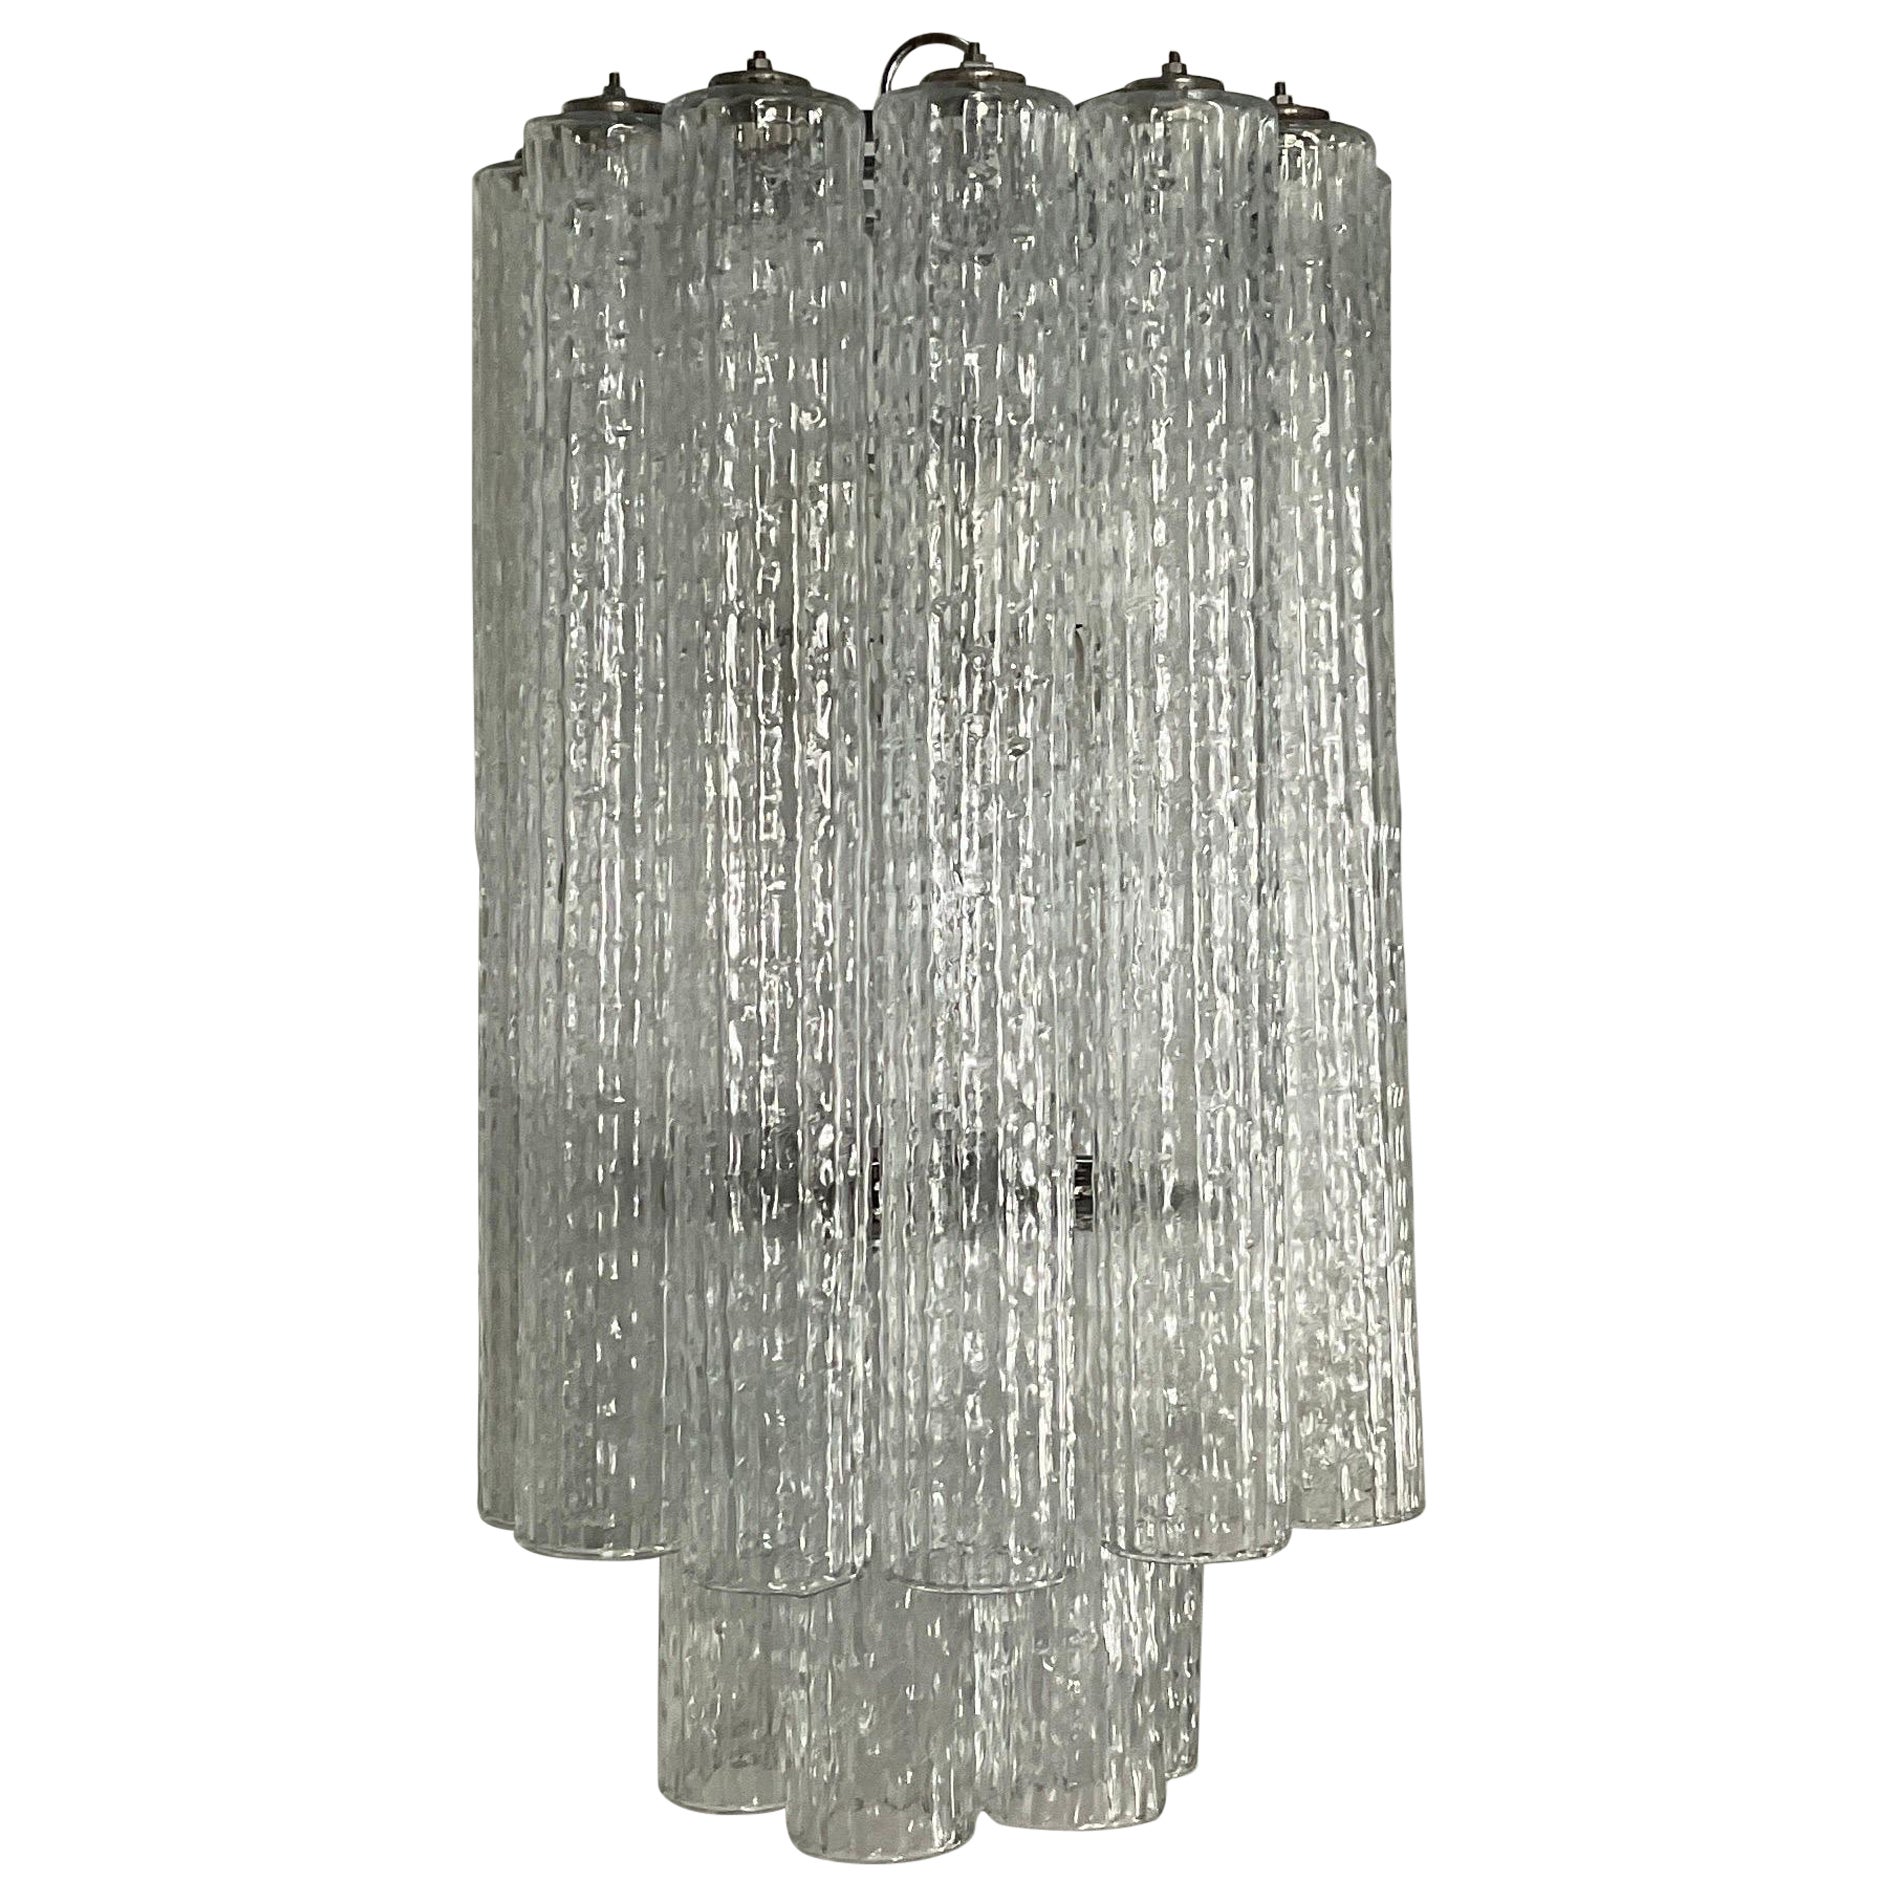 Murano glass chandelier attributable to Venini, 70s